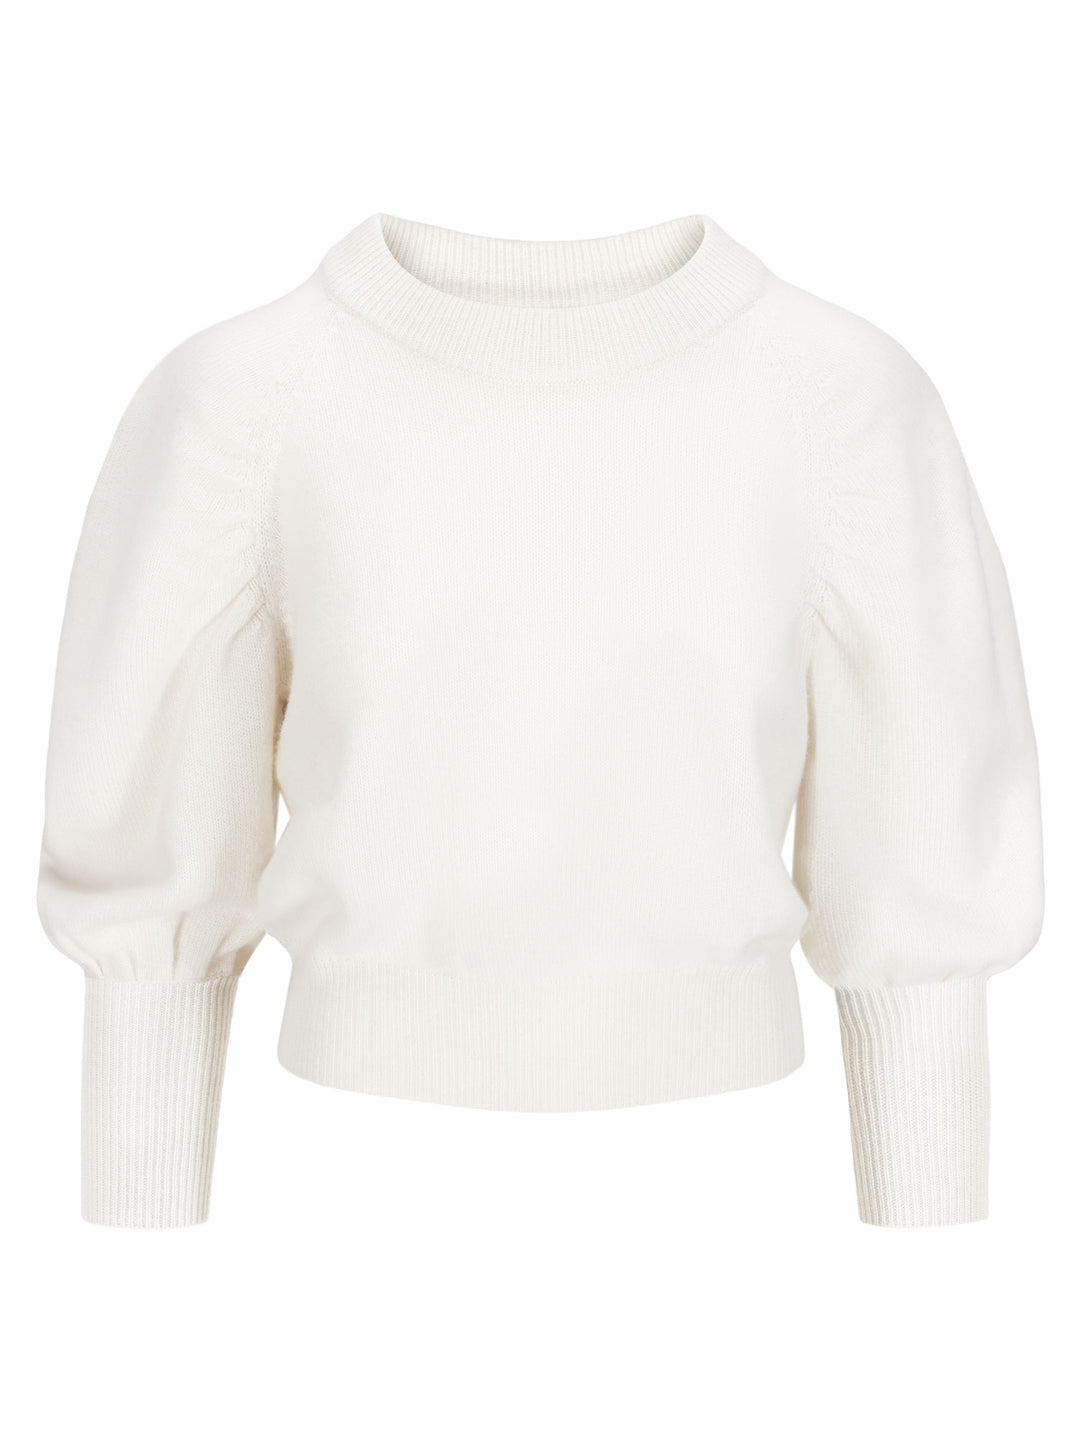 cashmere sweater "Aurora" norwegian design in 100% pure cashmere